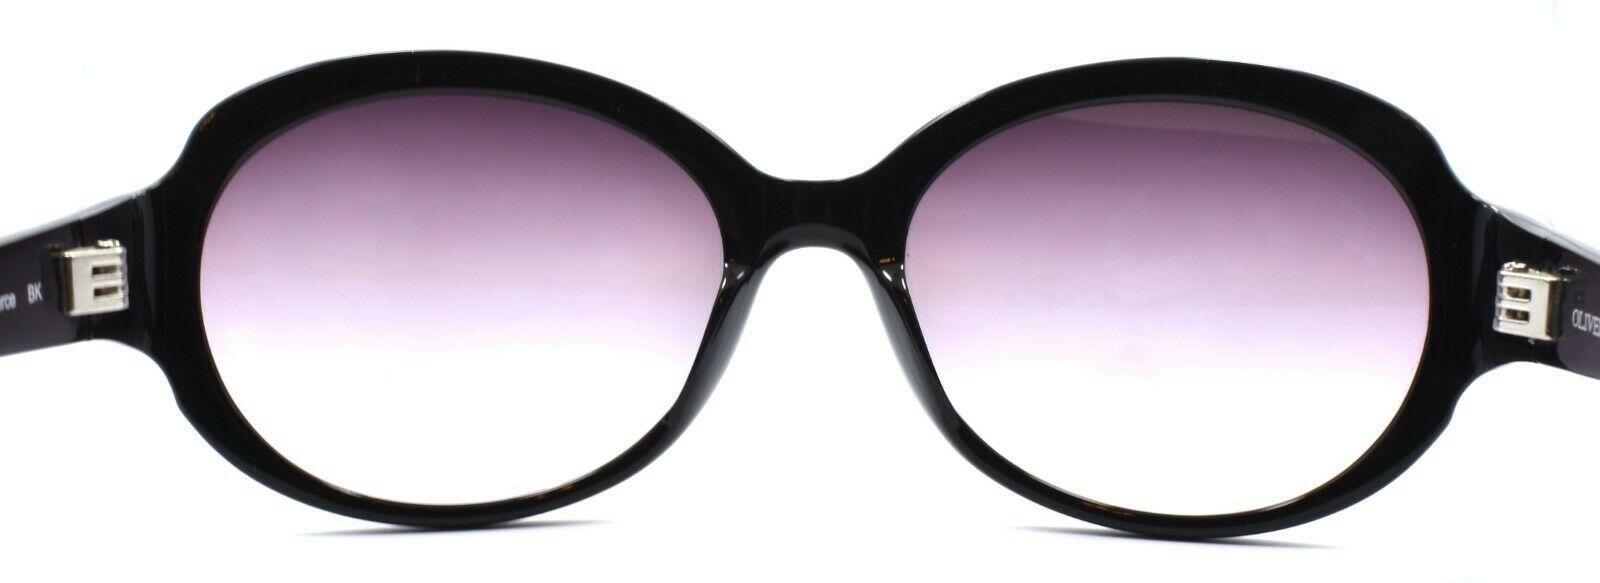 5-Oliver Peoples Merce BK Women's Sunglasses Black / Smoke Gradient JAPAN-Does not apply-IKSpecs